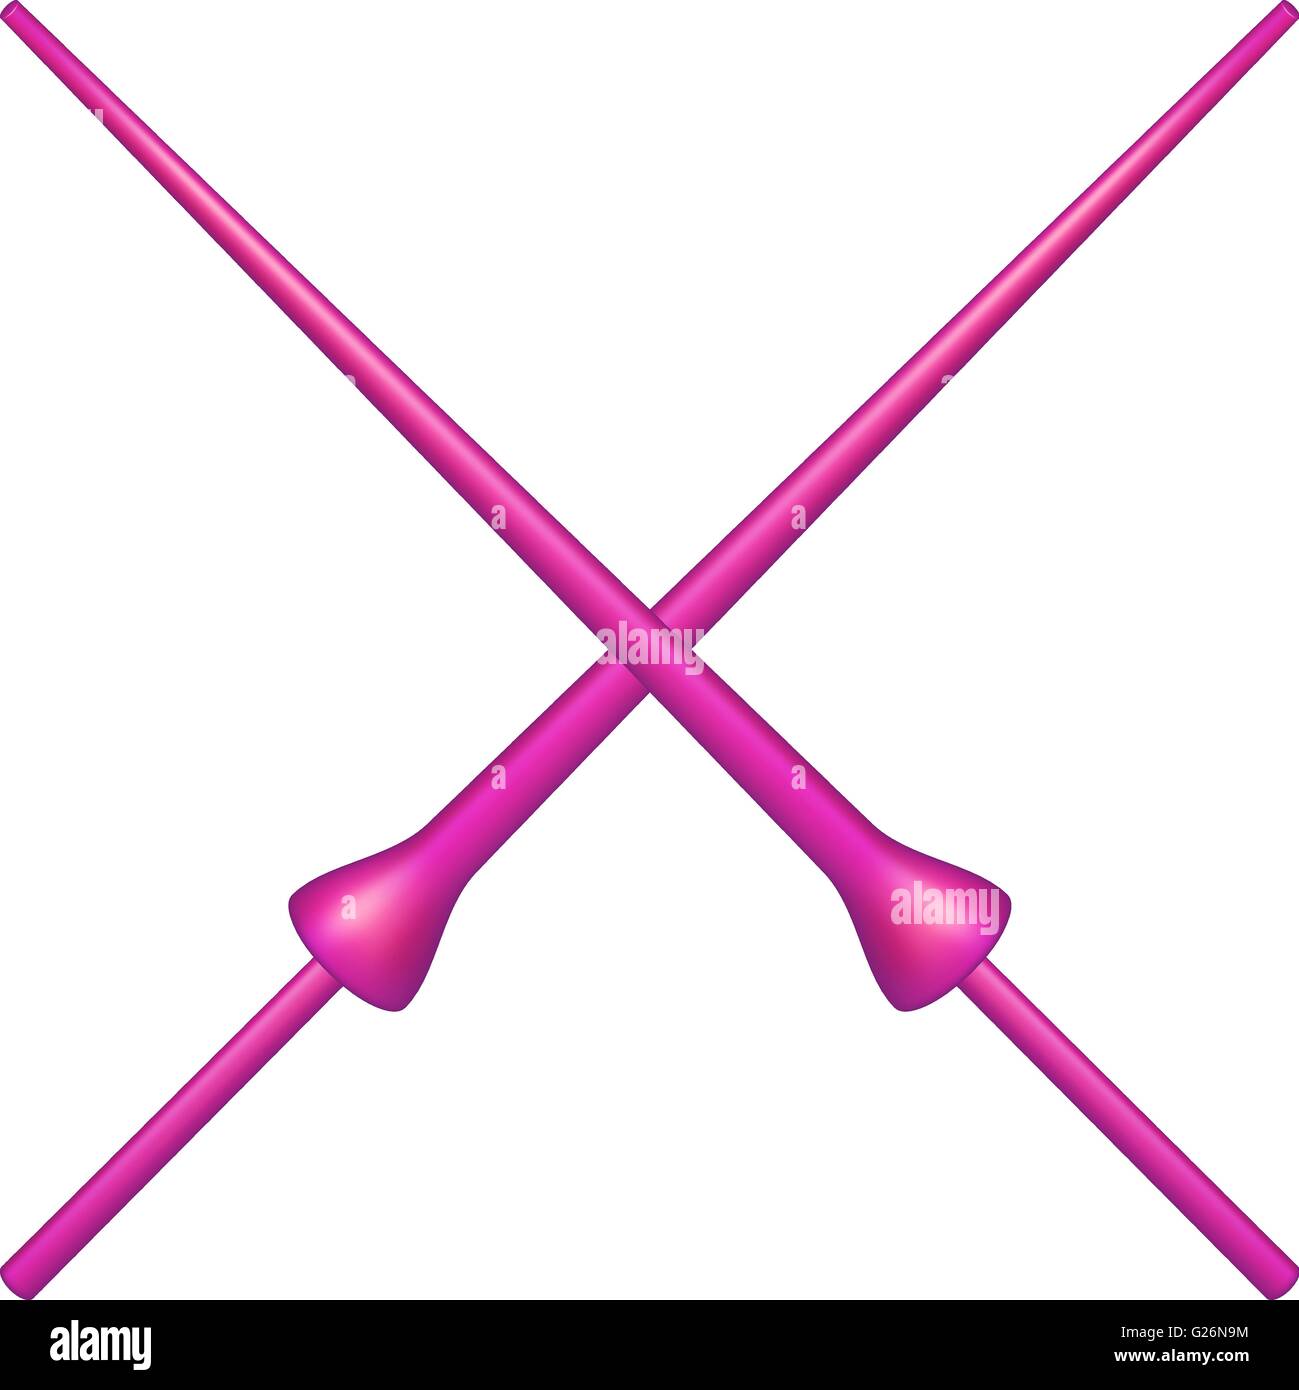 Zwei gekreuzte Lanzen in rosa design Stock Vektor